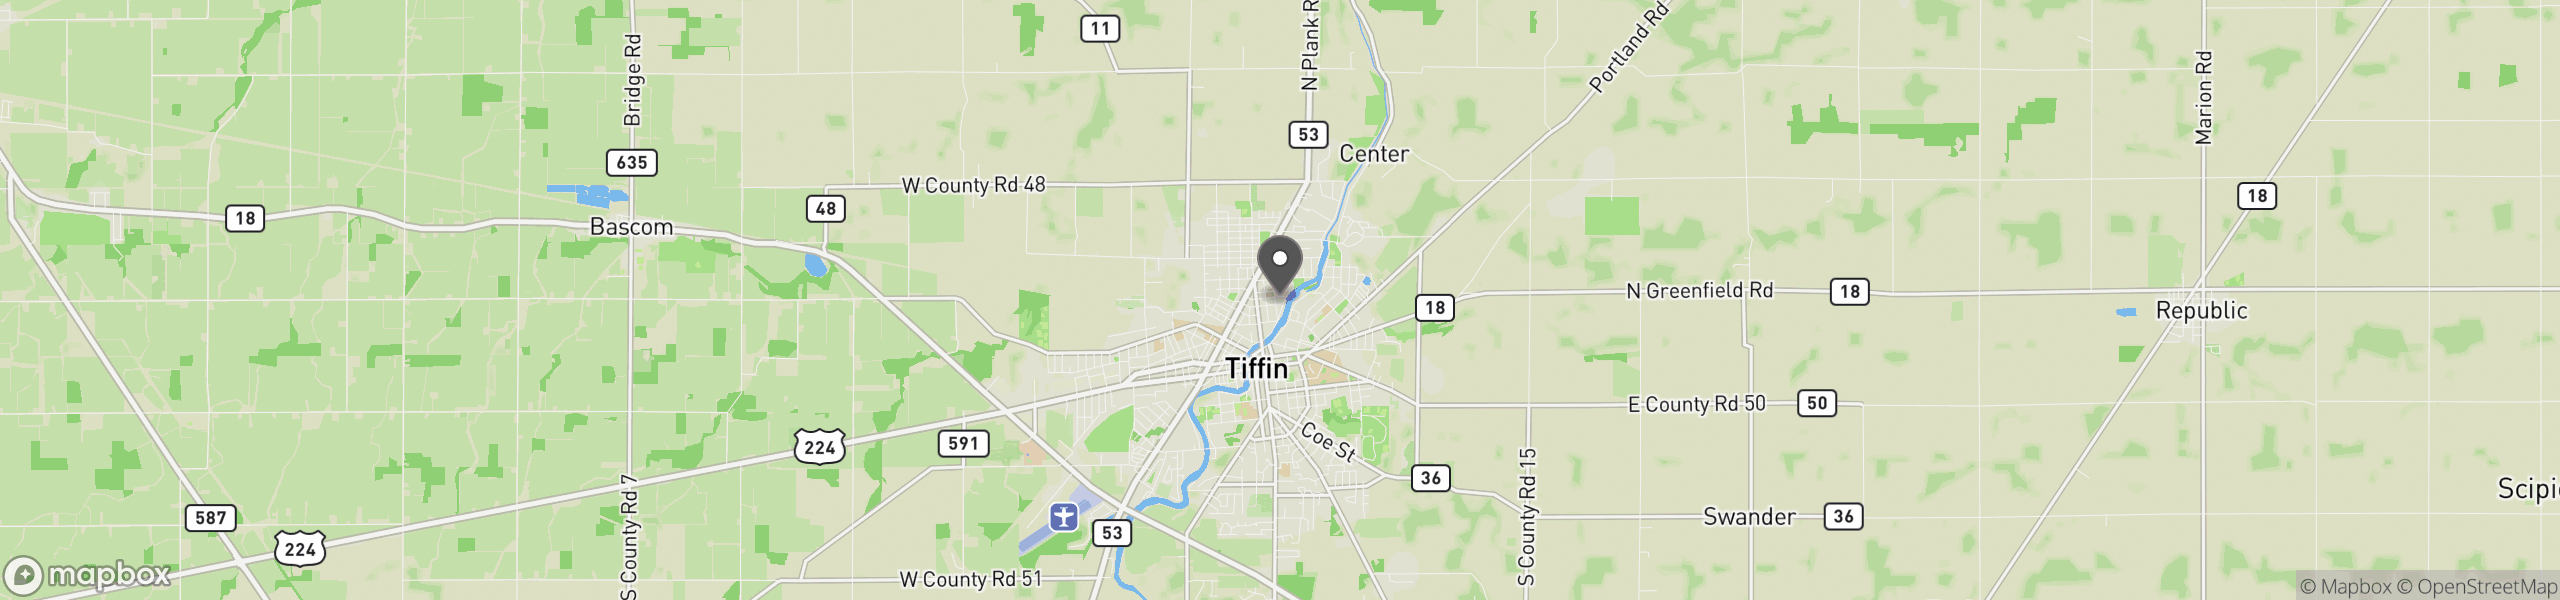 Tiffin, OH 44883